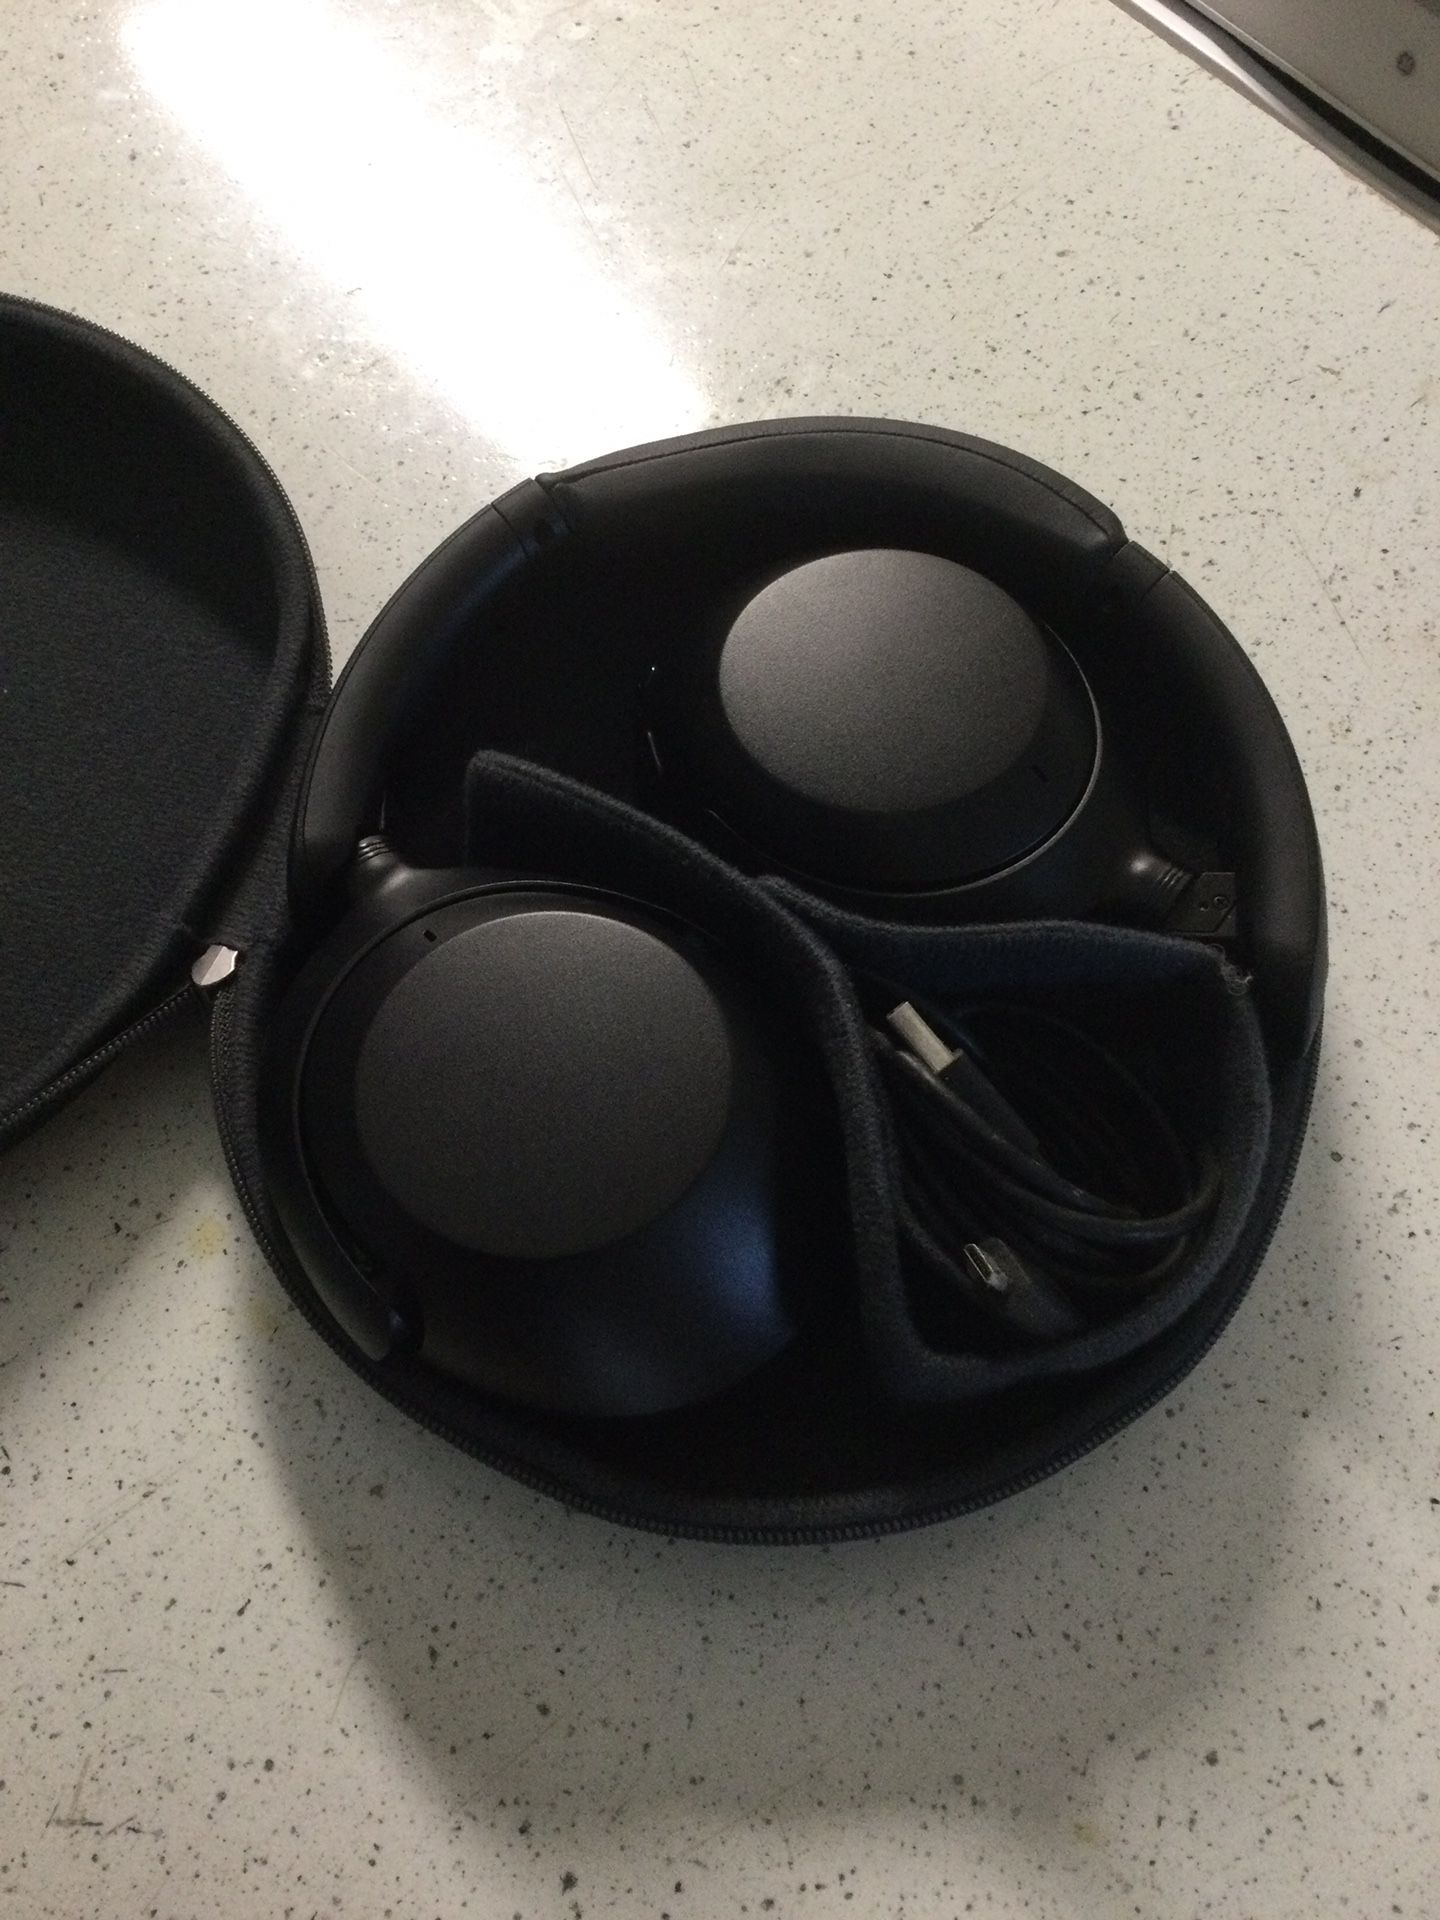 Sony WH-XB910N Bluetooth Headphones.